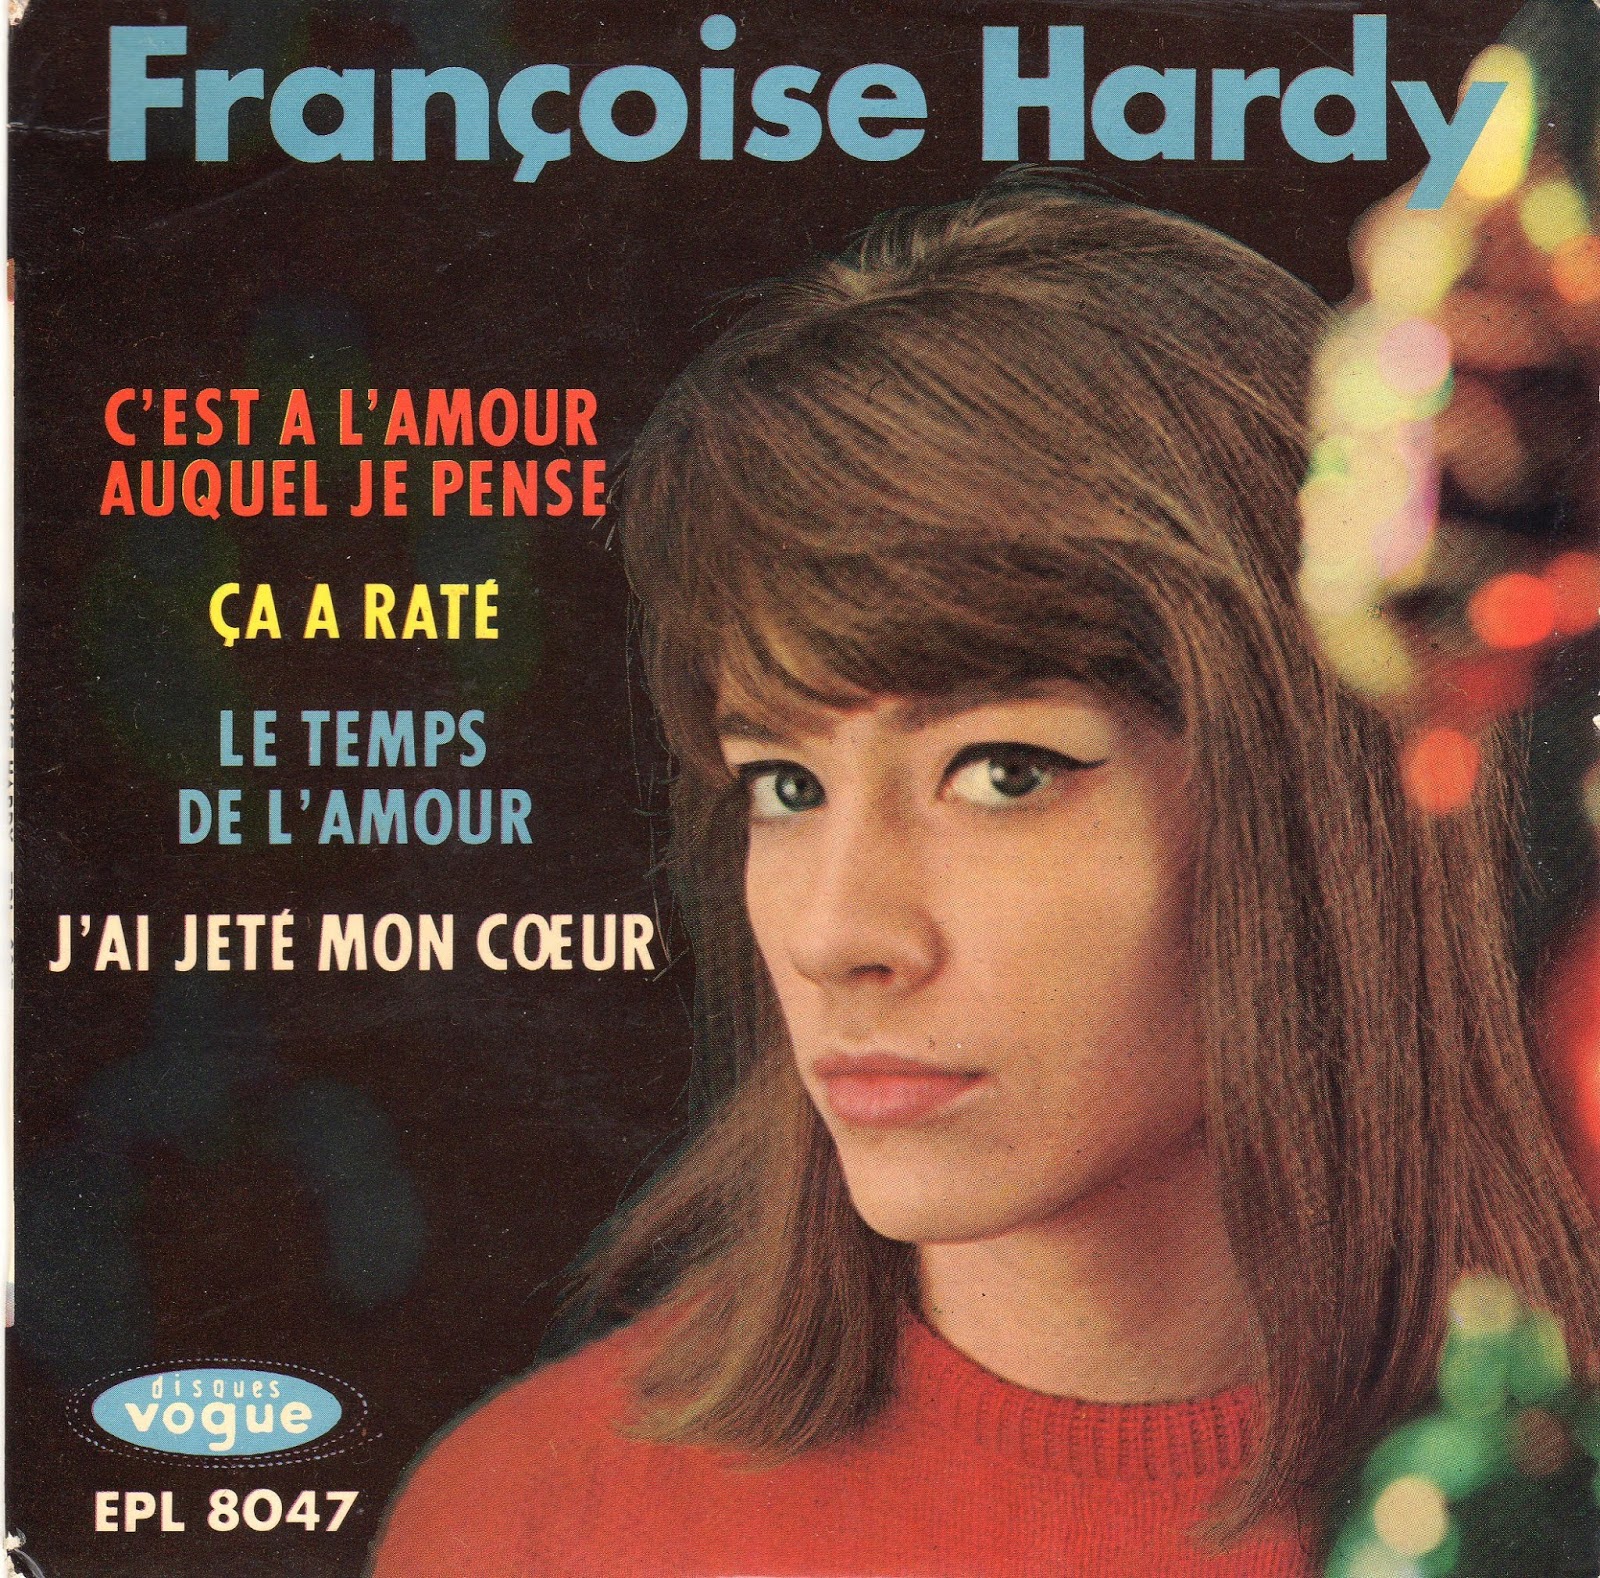 Temps de l amour. Francoise Hardy обложка. Francoise Hardy фото.